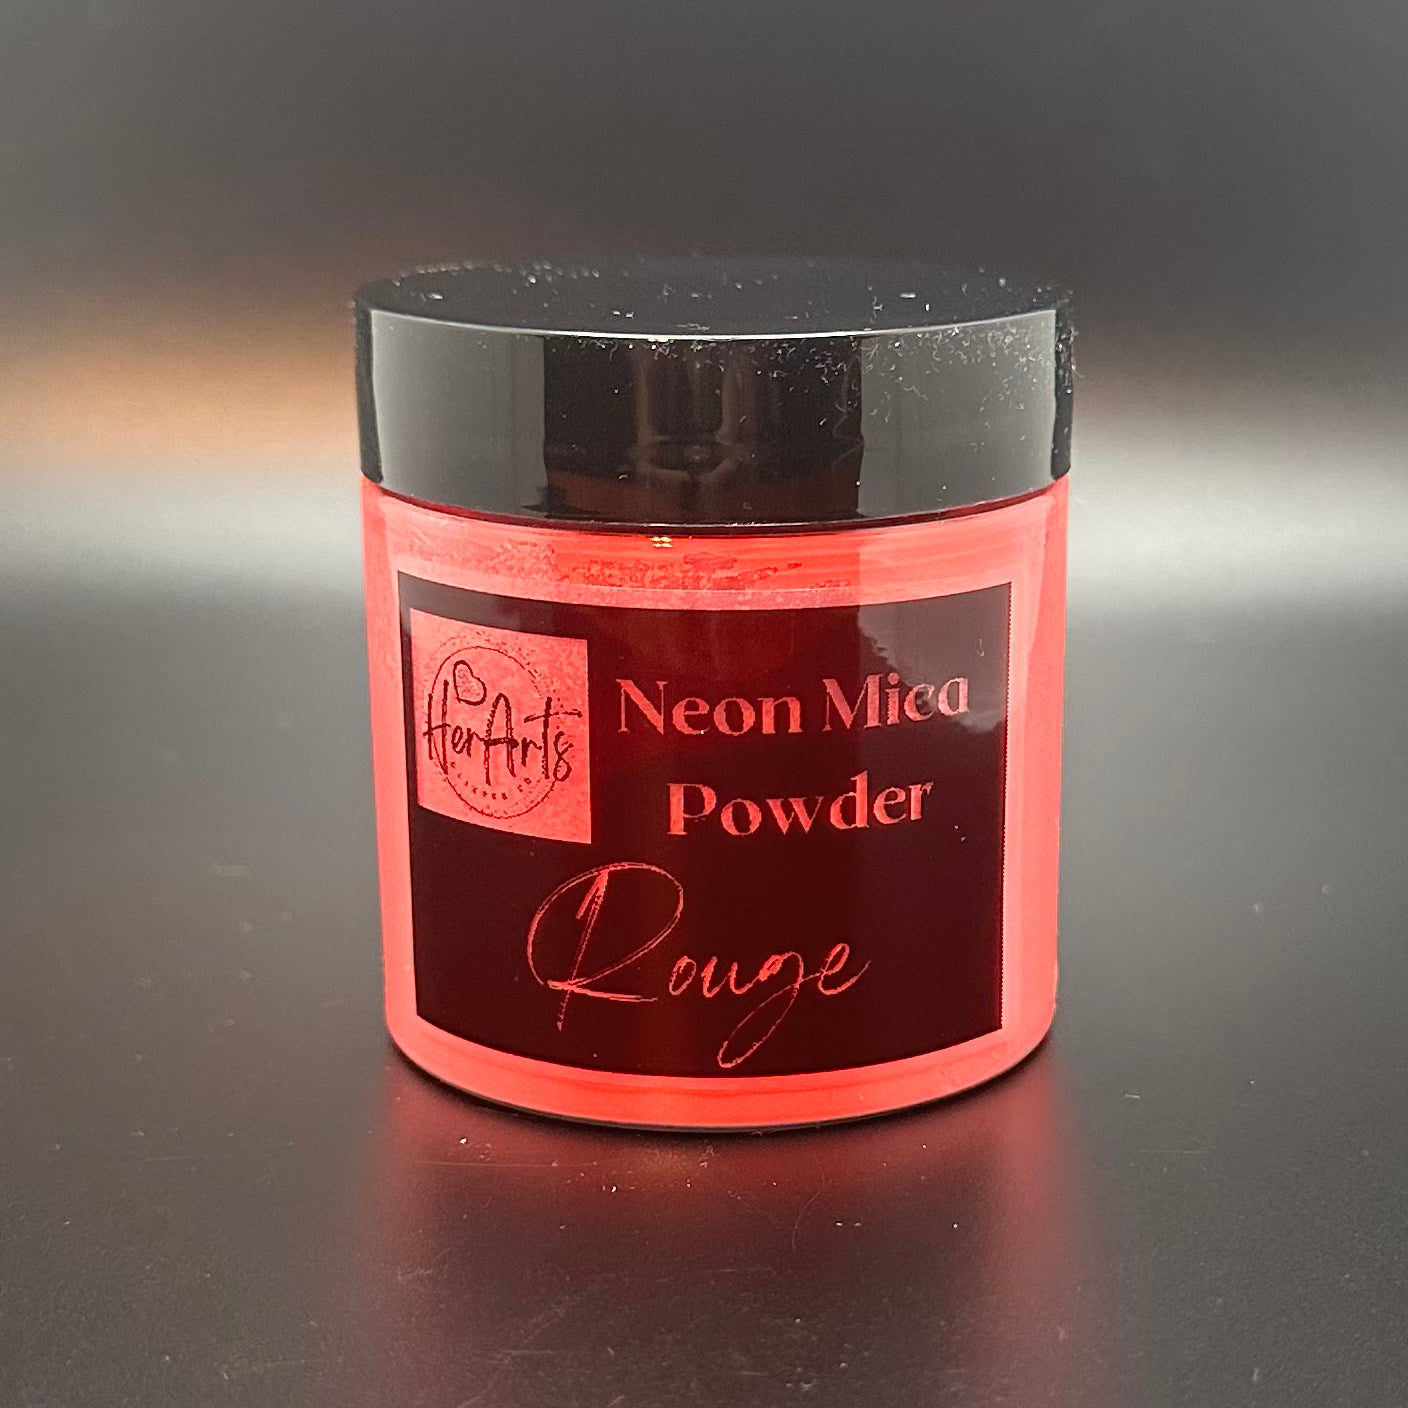 Neon Mica Powder, Rouge